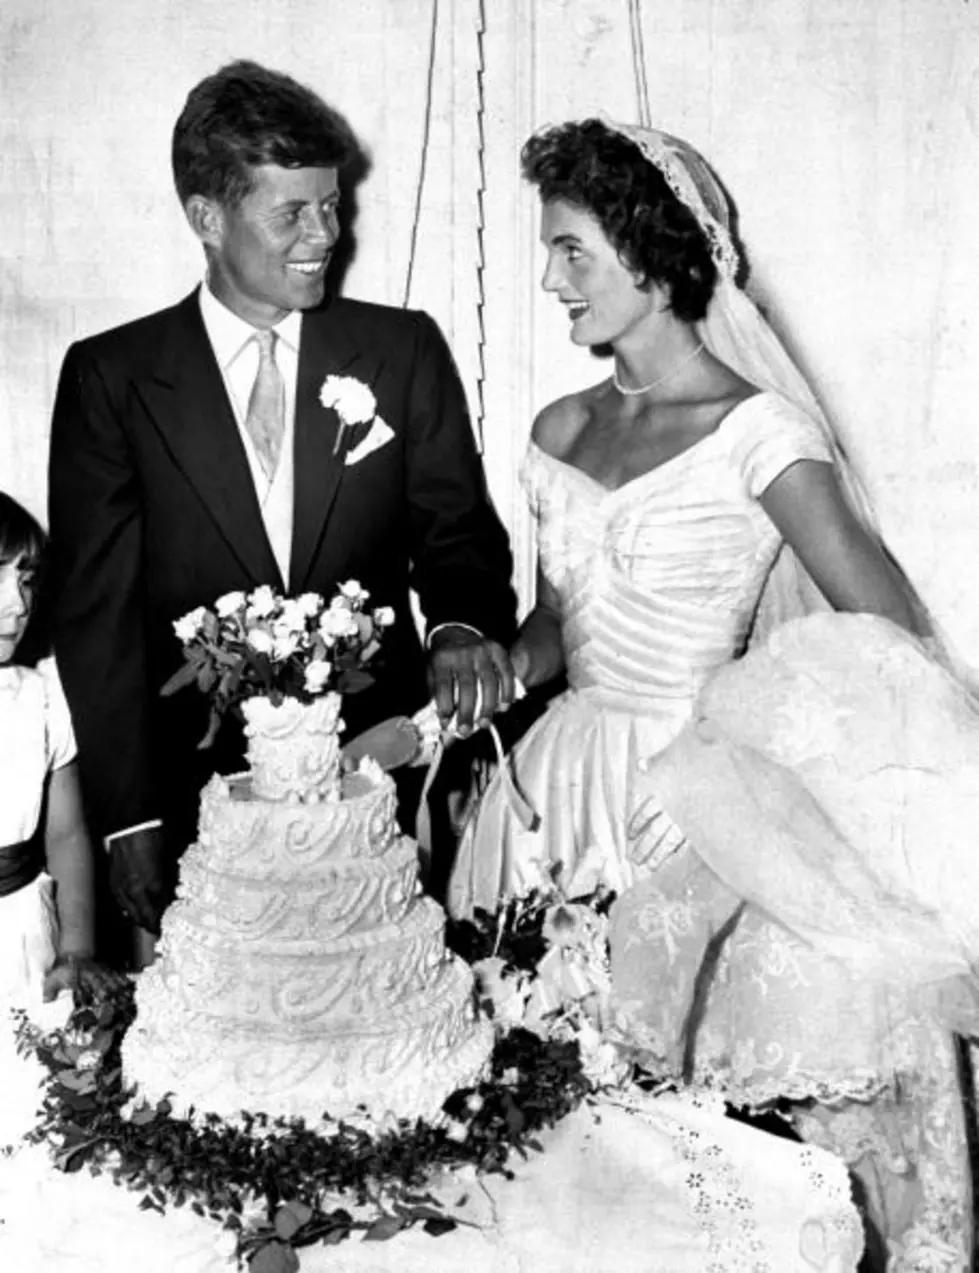 JFK Wedding Cake From Fall River Bakery